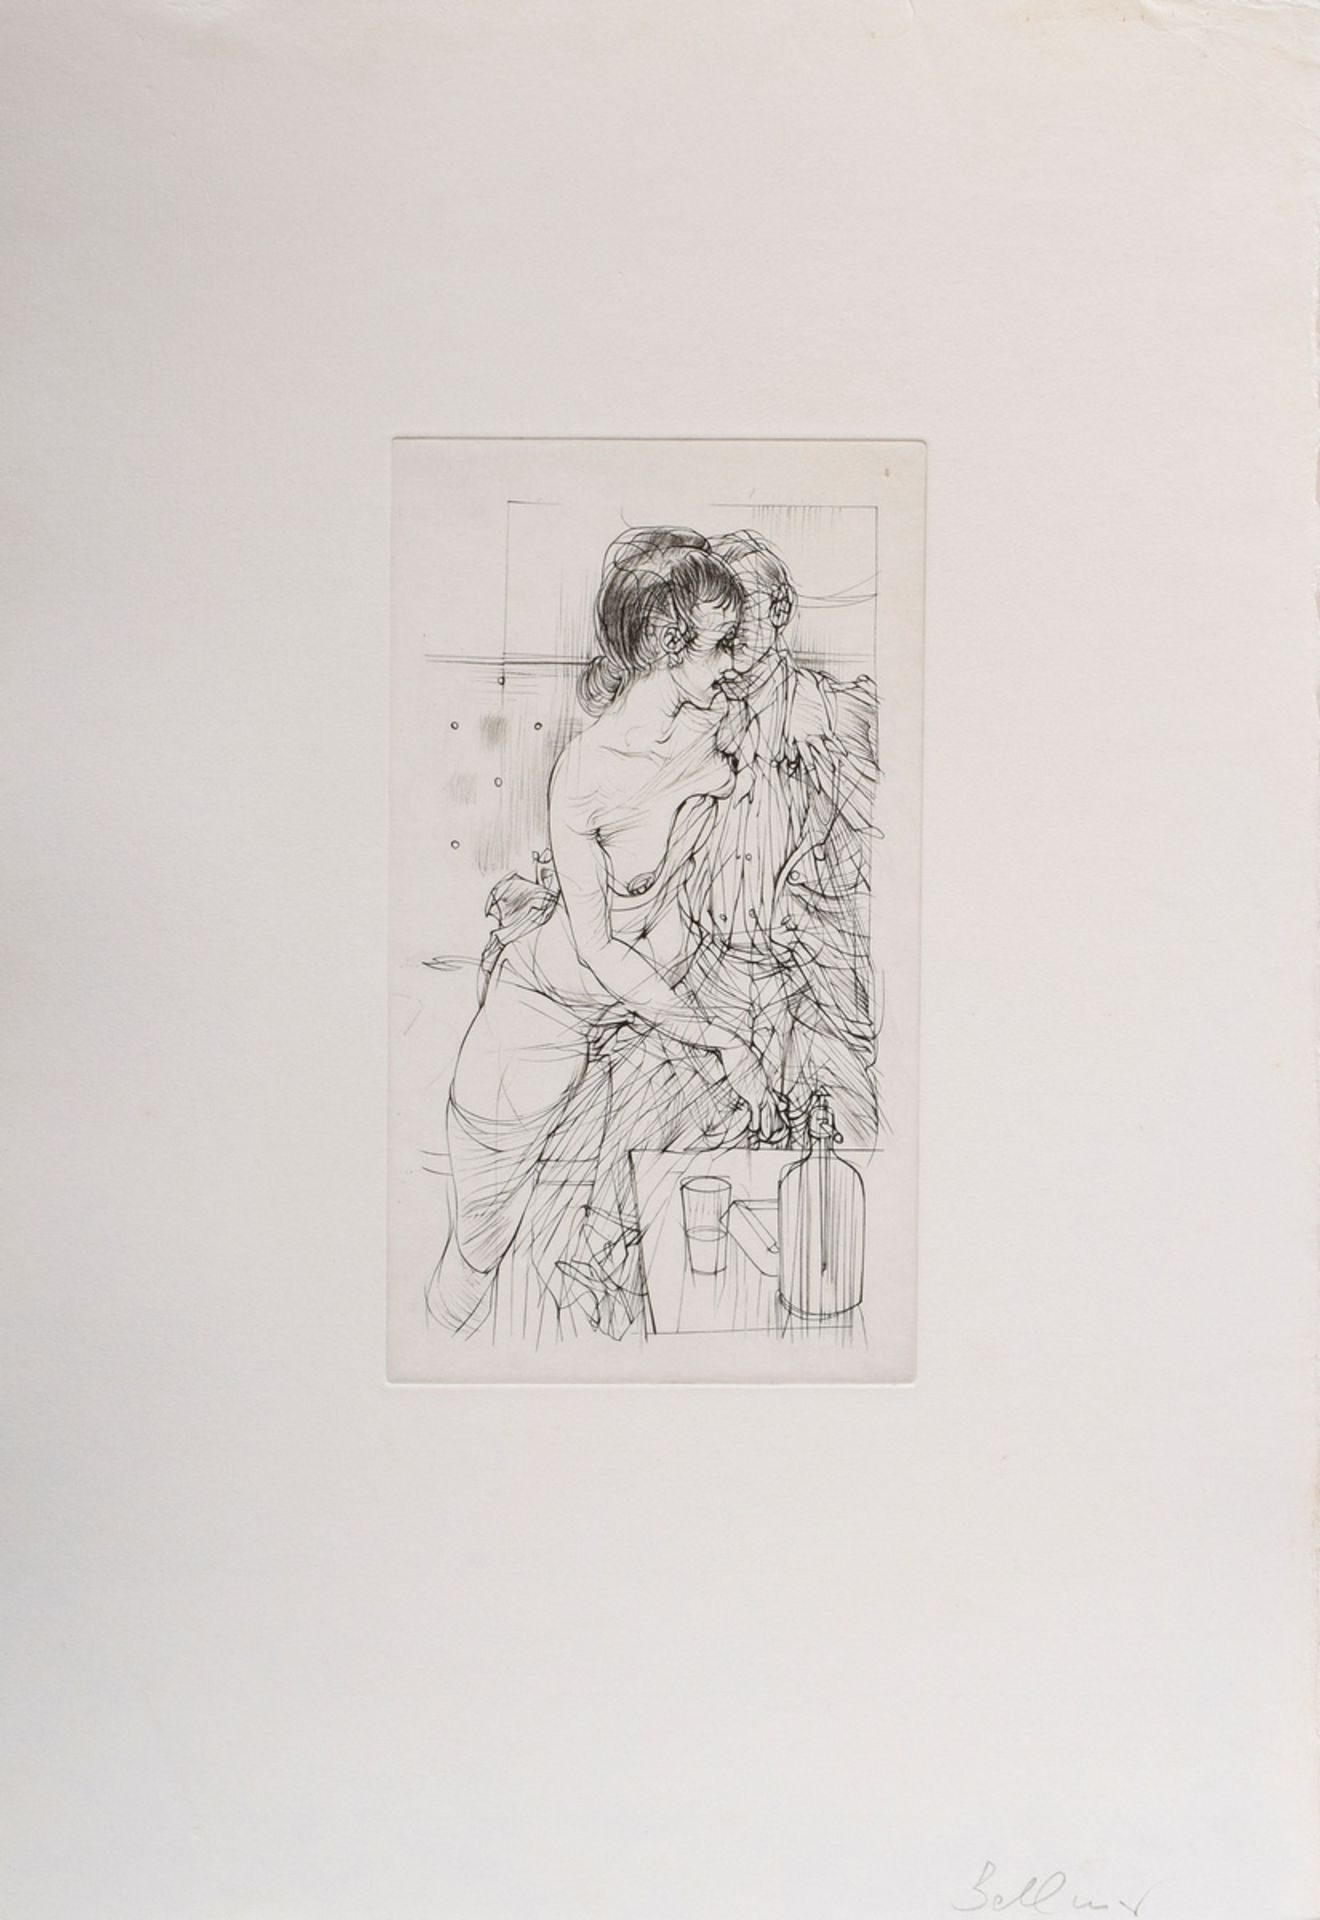 7 Bellmer, Hans (1902-1975) "Female", etchings, u. inscr., printer's proofs, PM 12x8,2-30,3x21,4cm, - Image 13 of 17